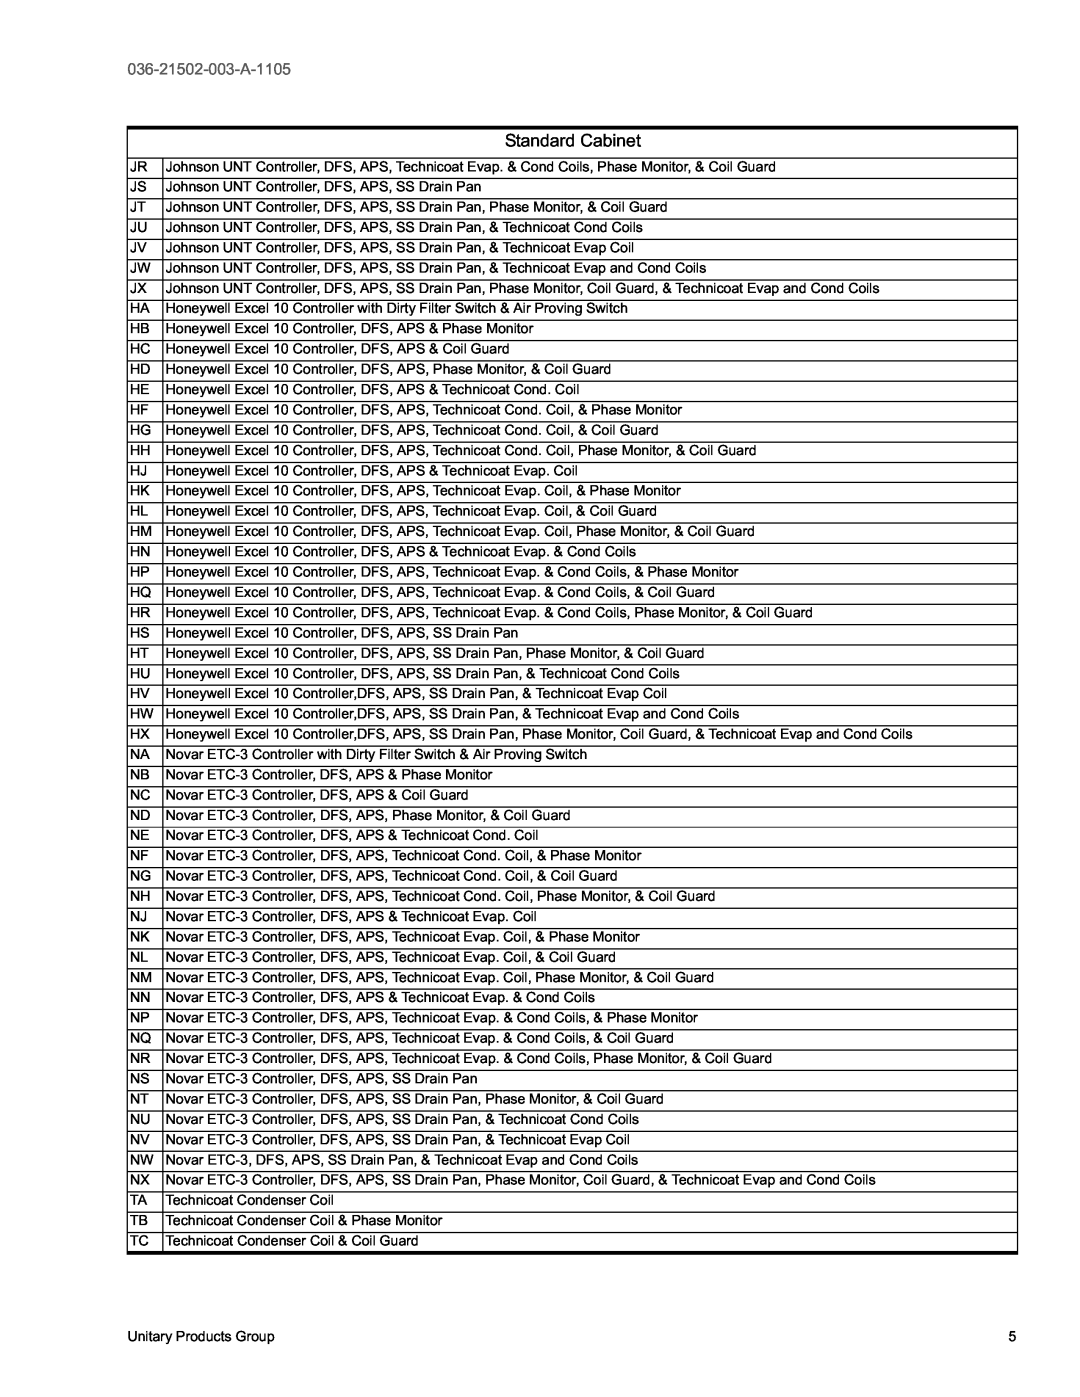 York DM 072 warranty Standard Cabinet, 036-21502-003-A-1105, Johnson UNT Controller, DFS, APS, SS Drain Pan 